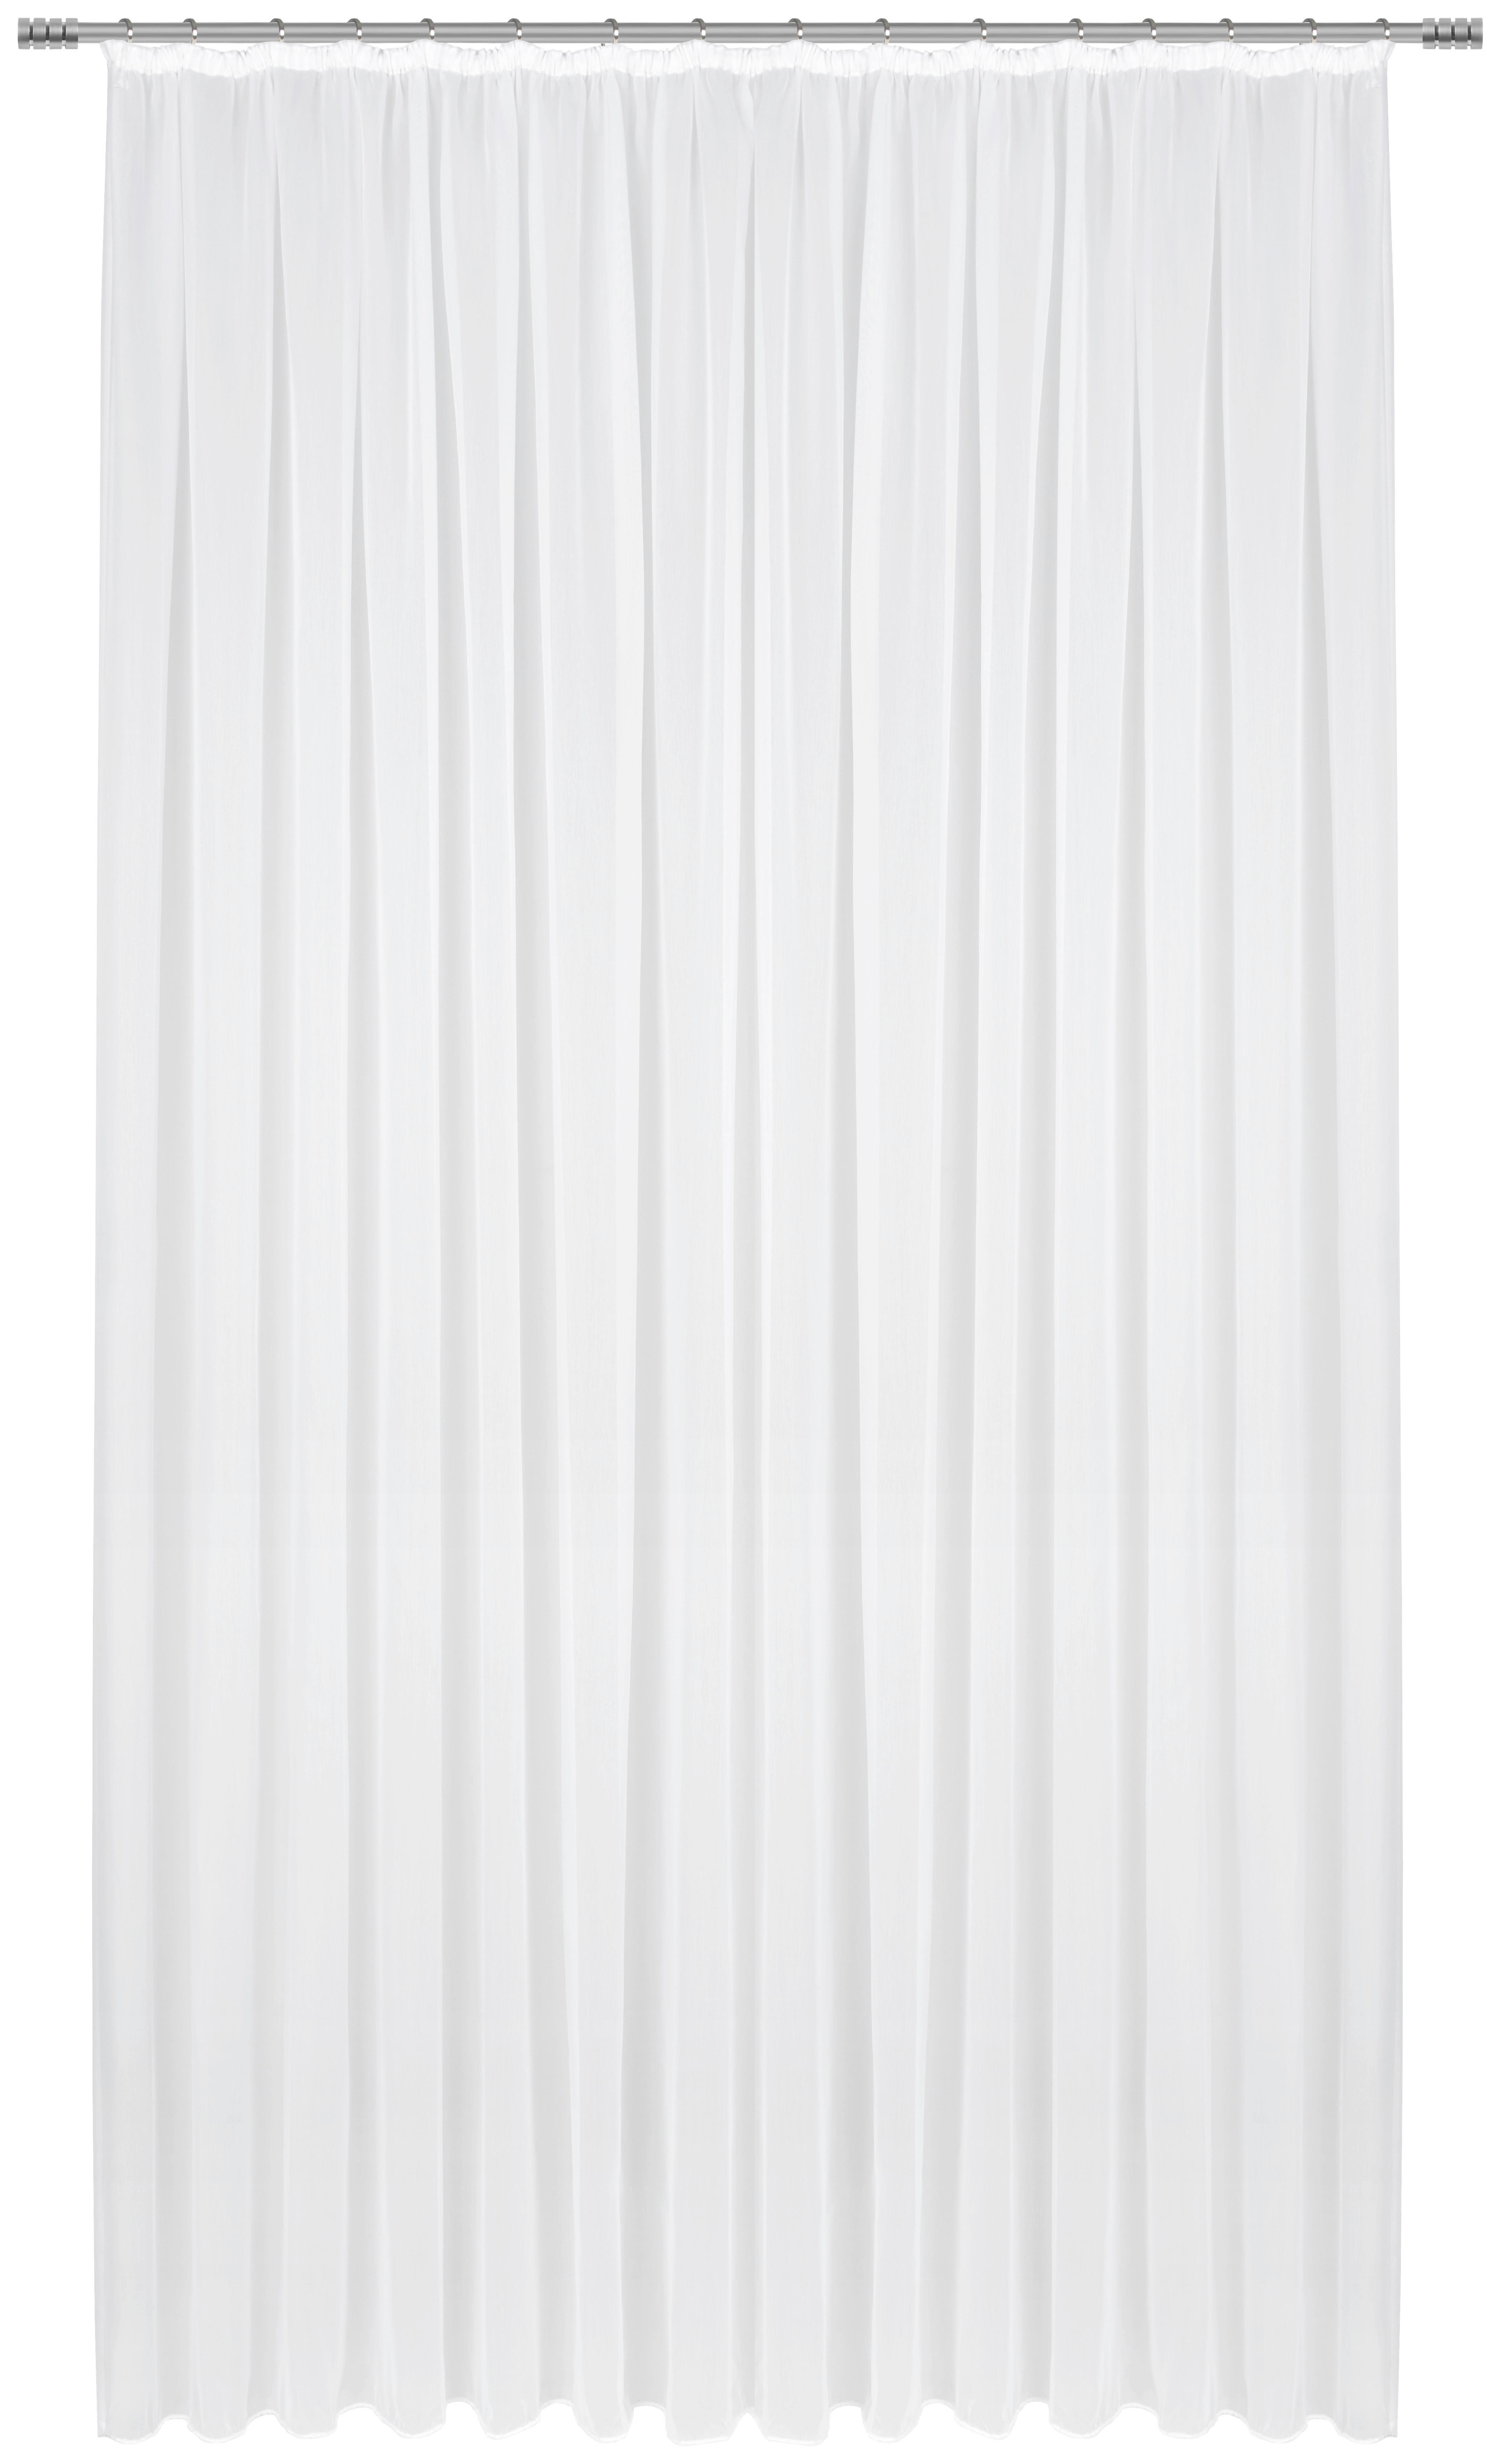 FERTIGSTORE  halbtransparent   300/245 cm  - Weiß, Basics, Textil (300/245cm) - Boxxx